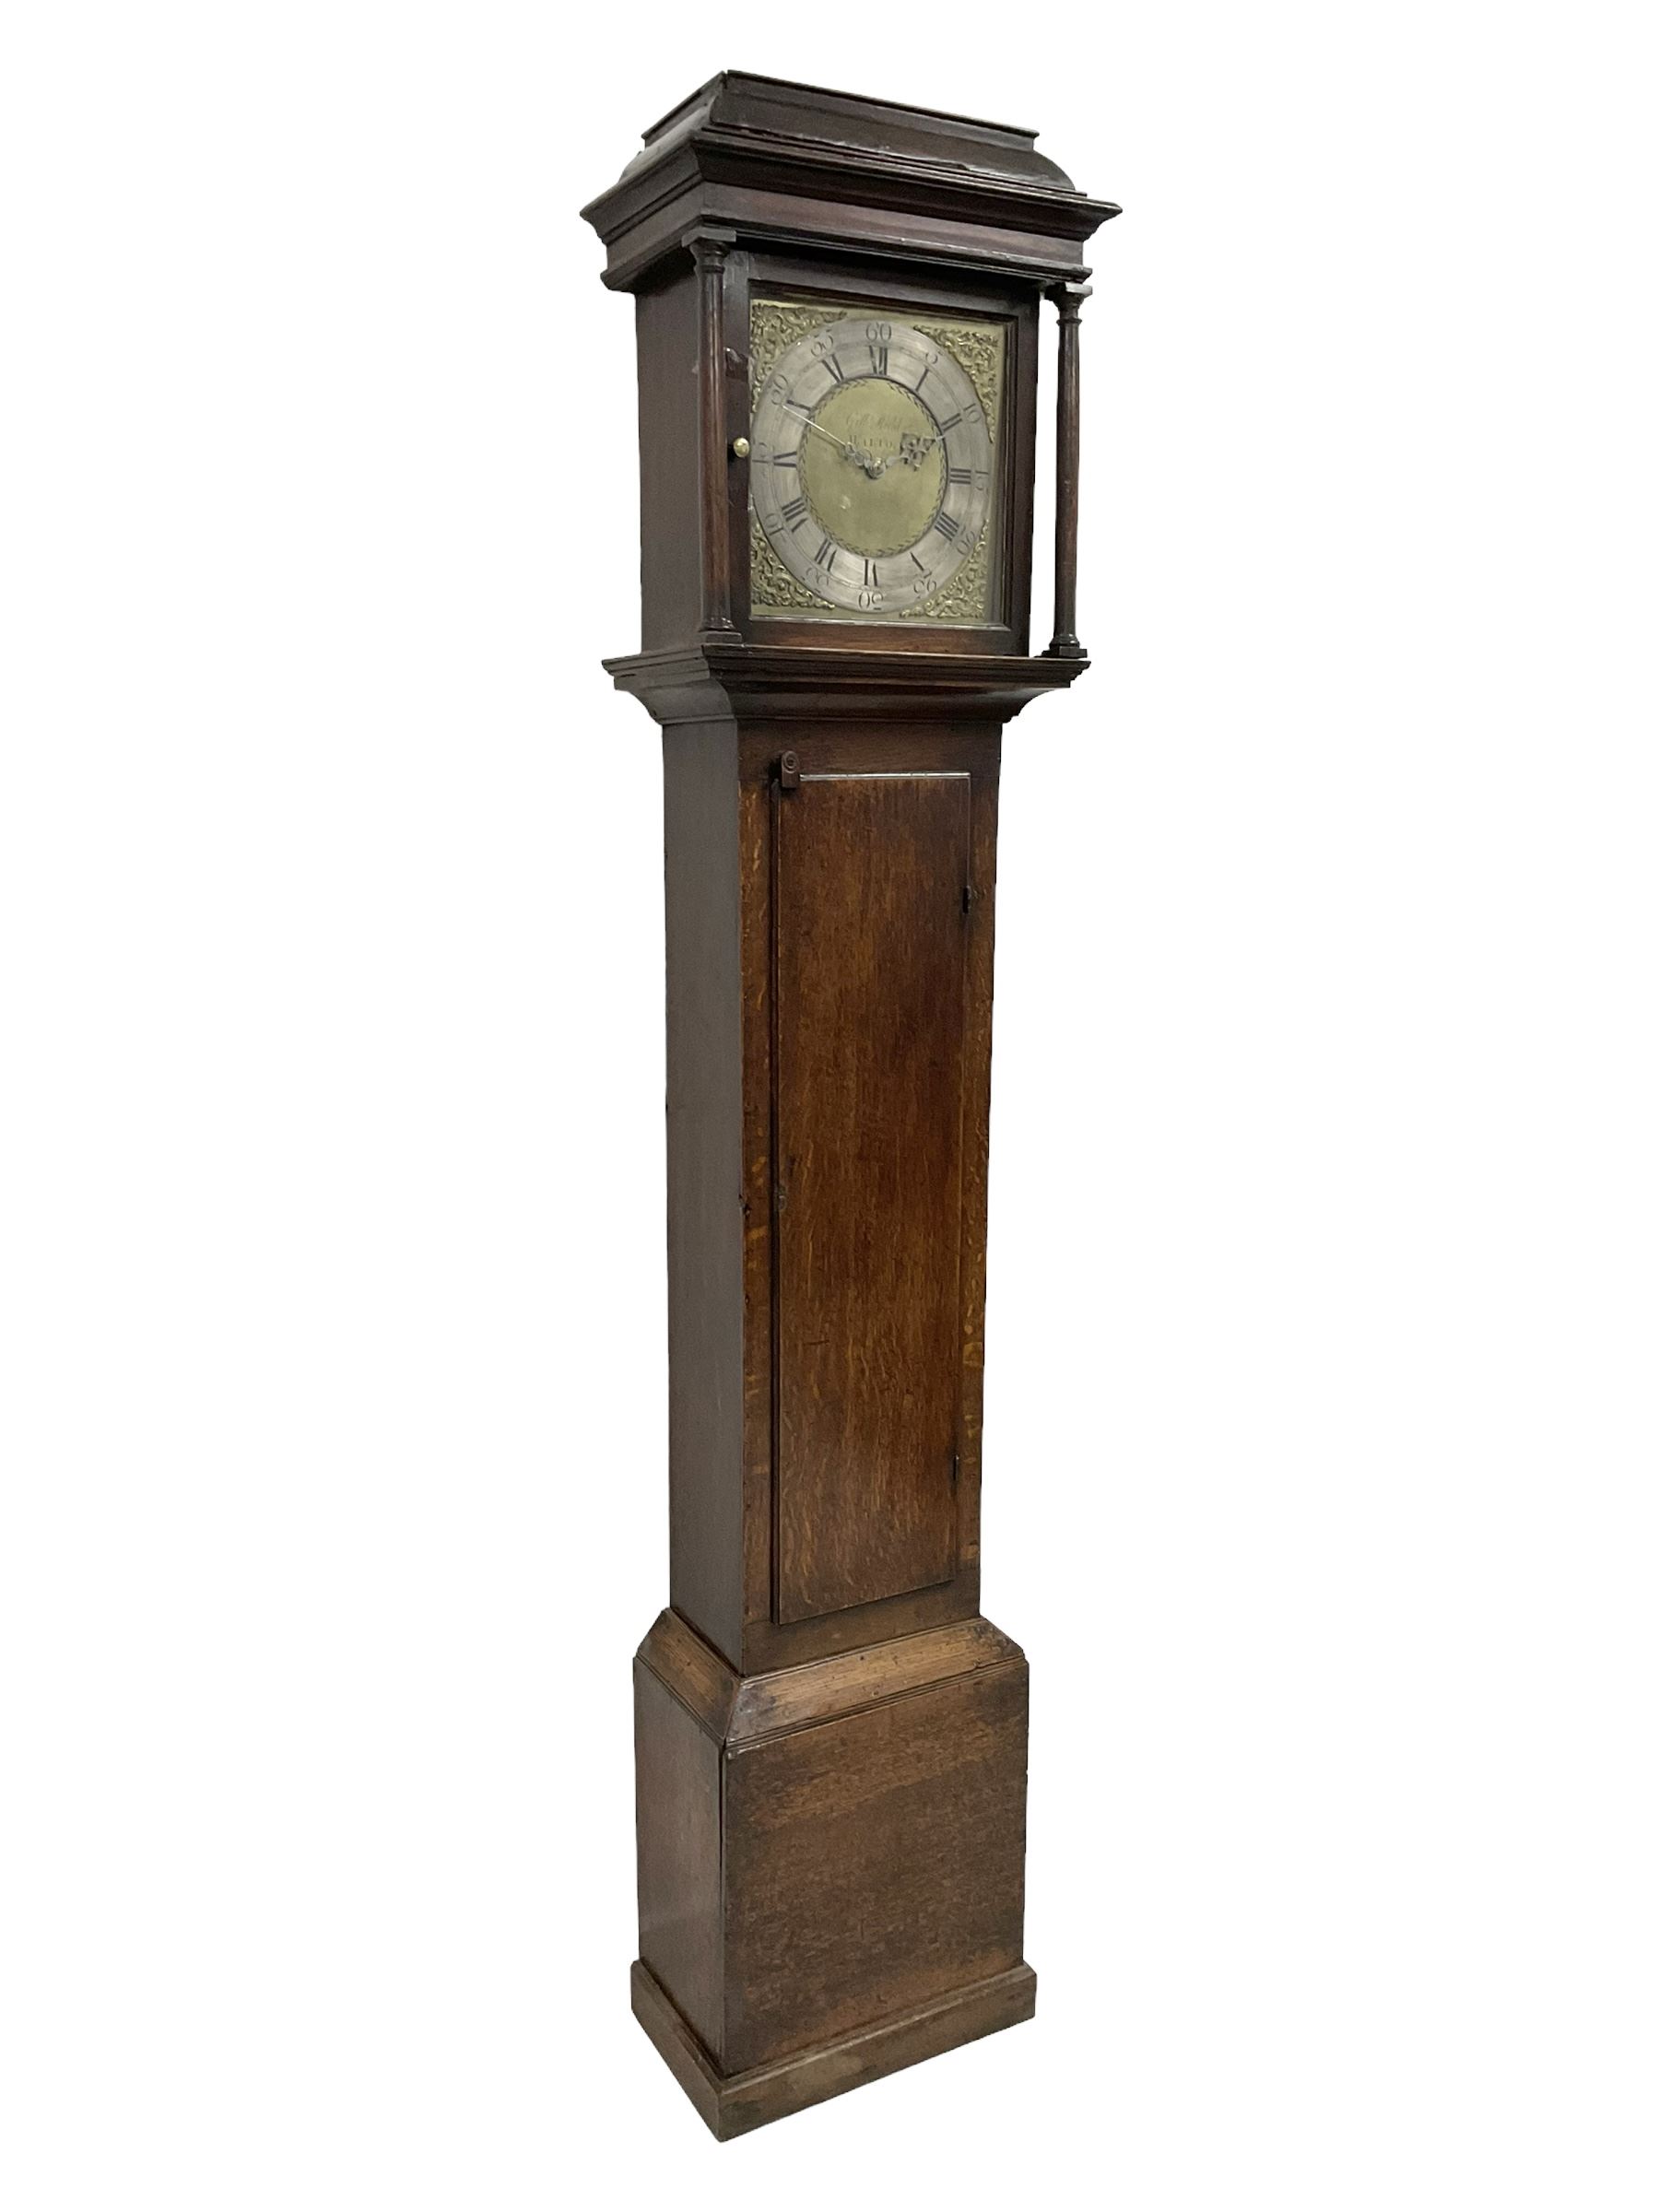 Gilbert Kidd of Malton - 30-hour 18th-century oak-cased longcase clock - Image 2 of 5